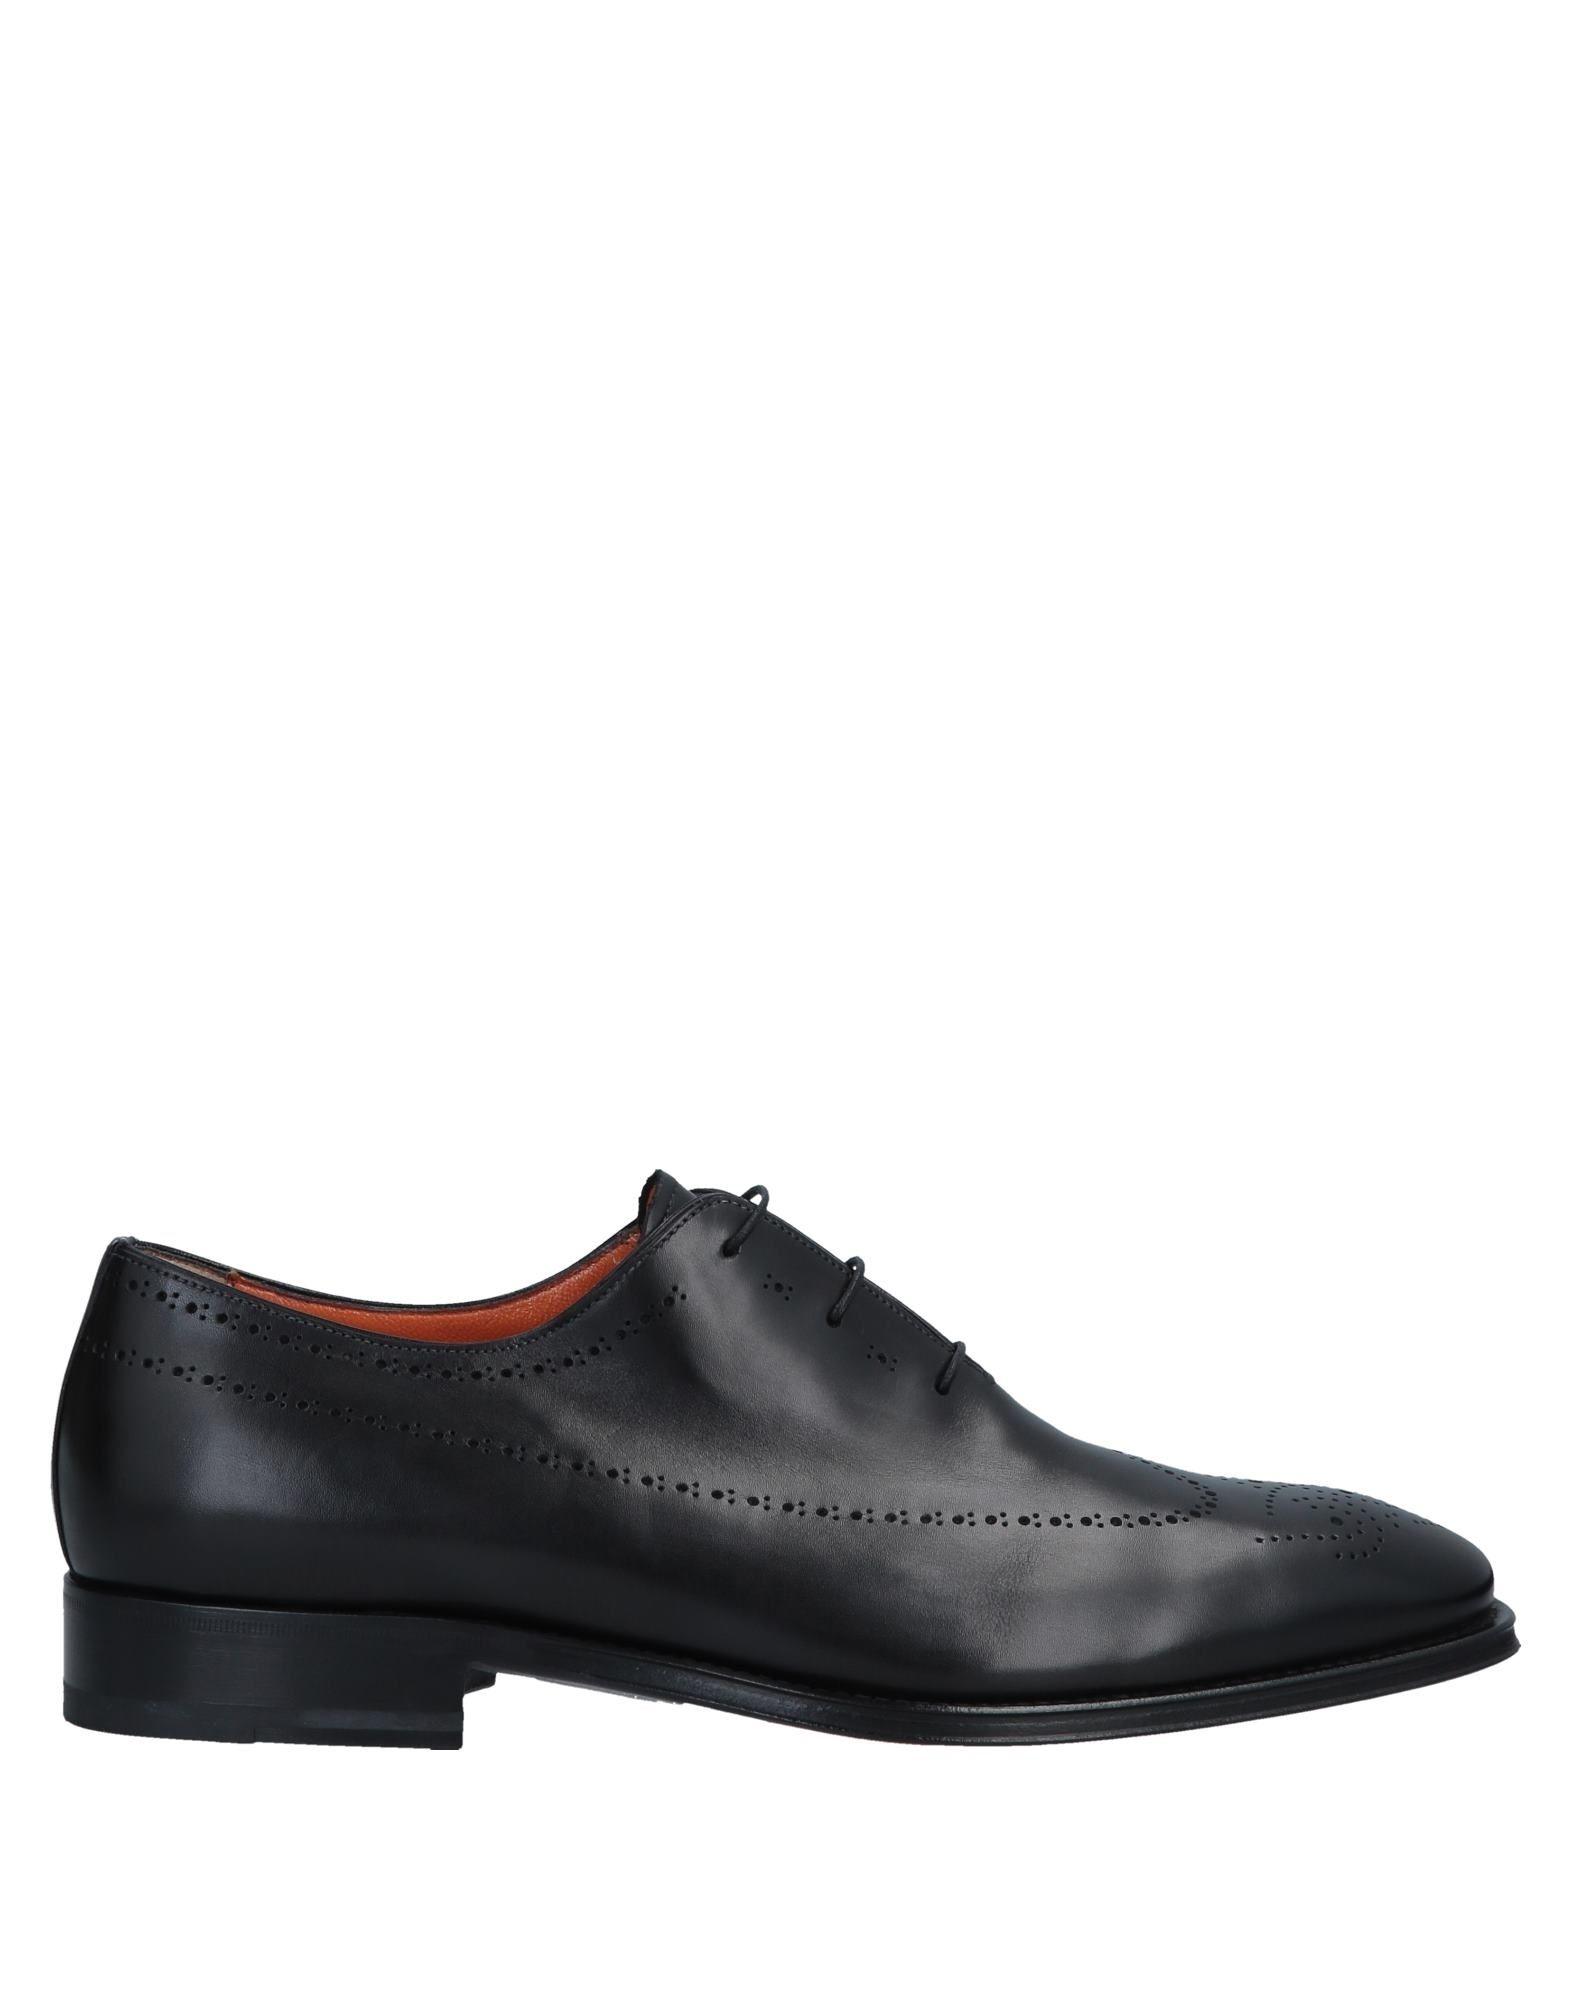 Santoni Leather Lace-up Shoe in Black for Men - Lyst